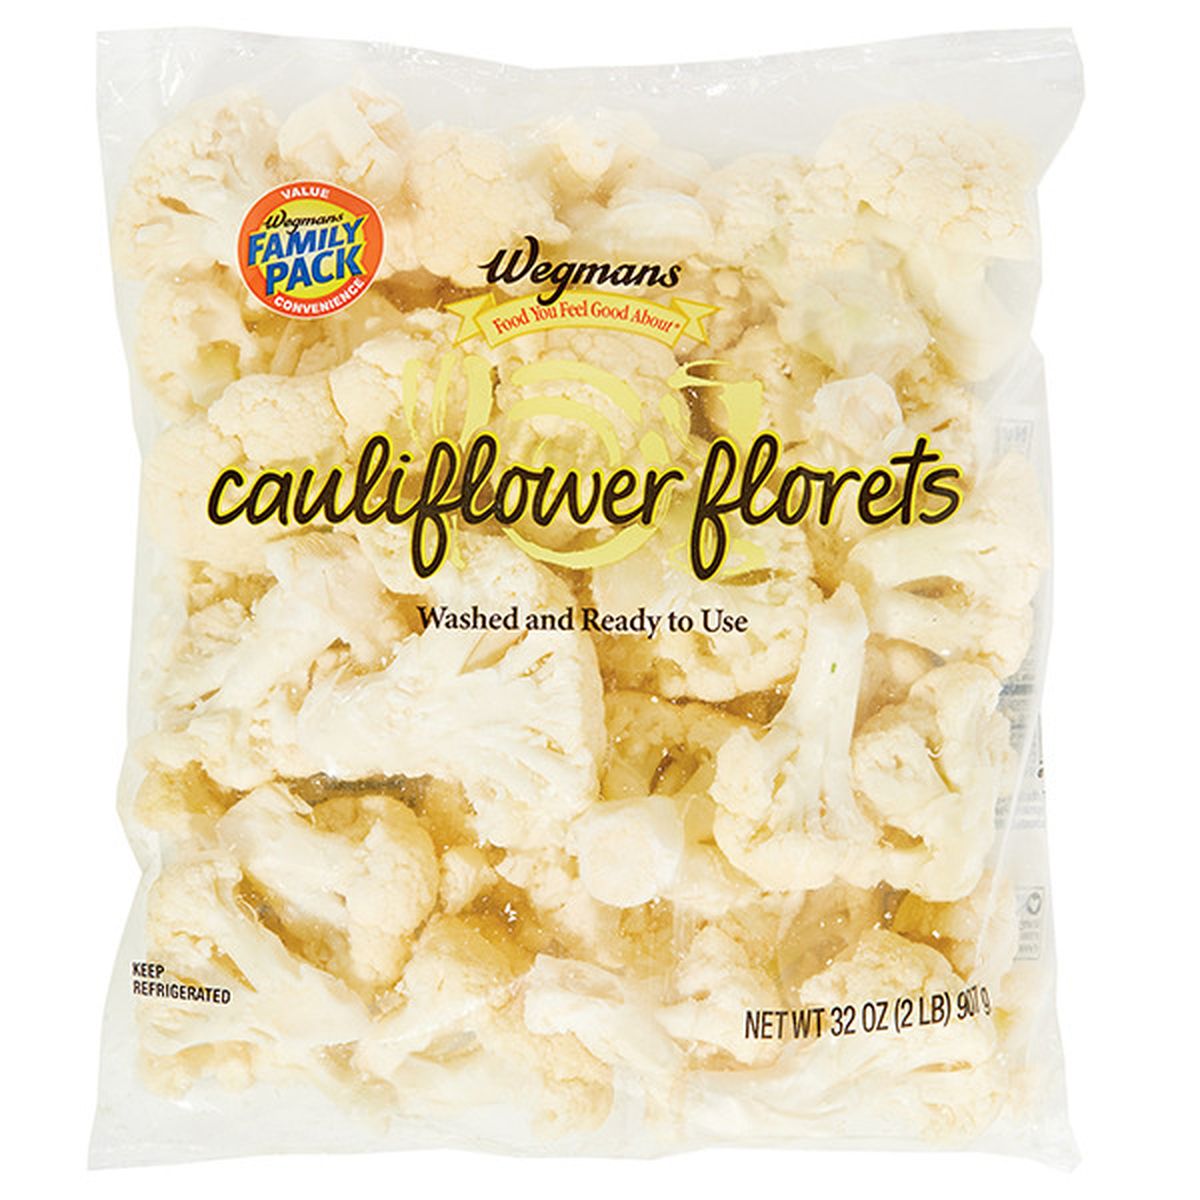 Calories in Wegmans Cauliflower Florets, FAMILY PACK